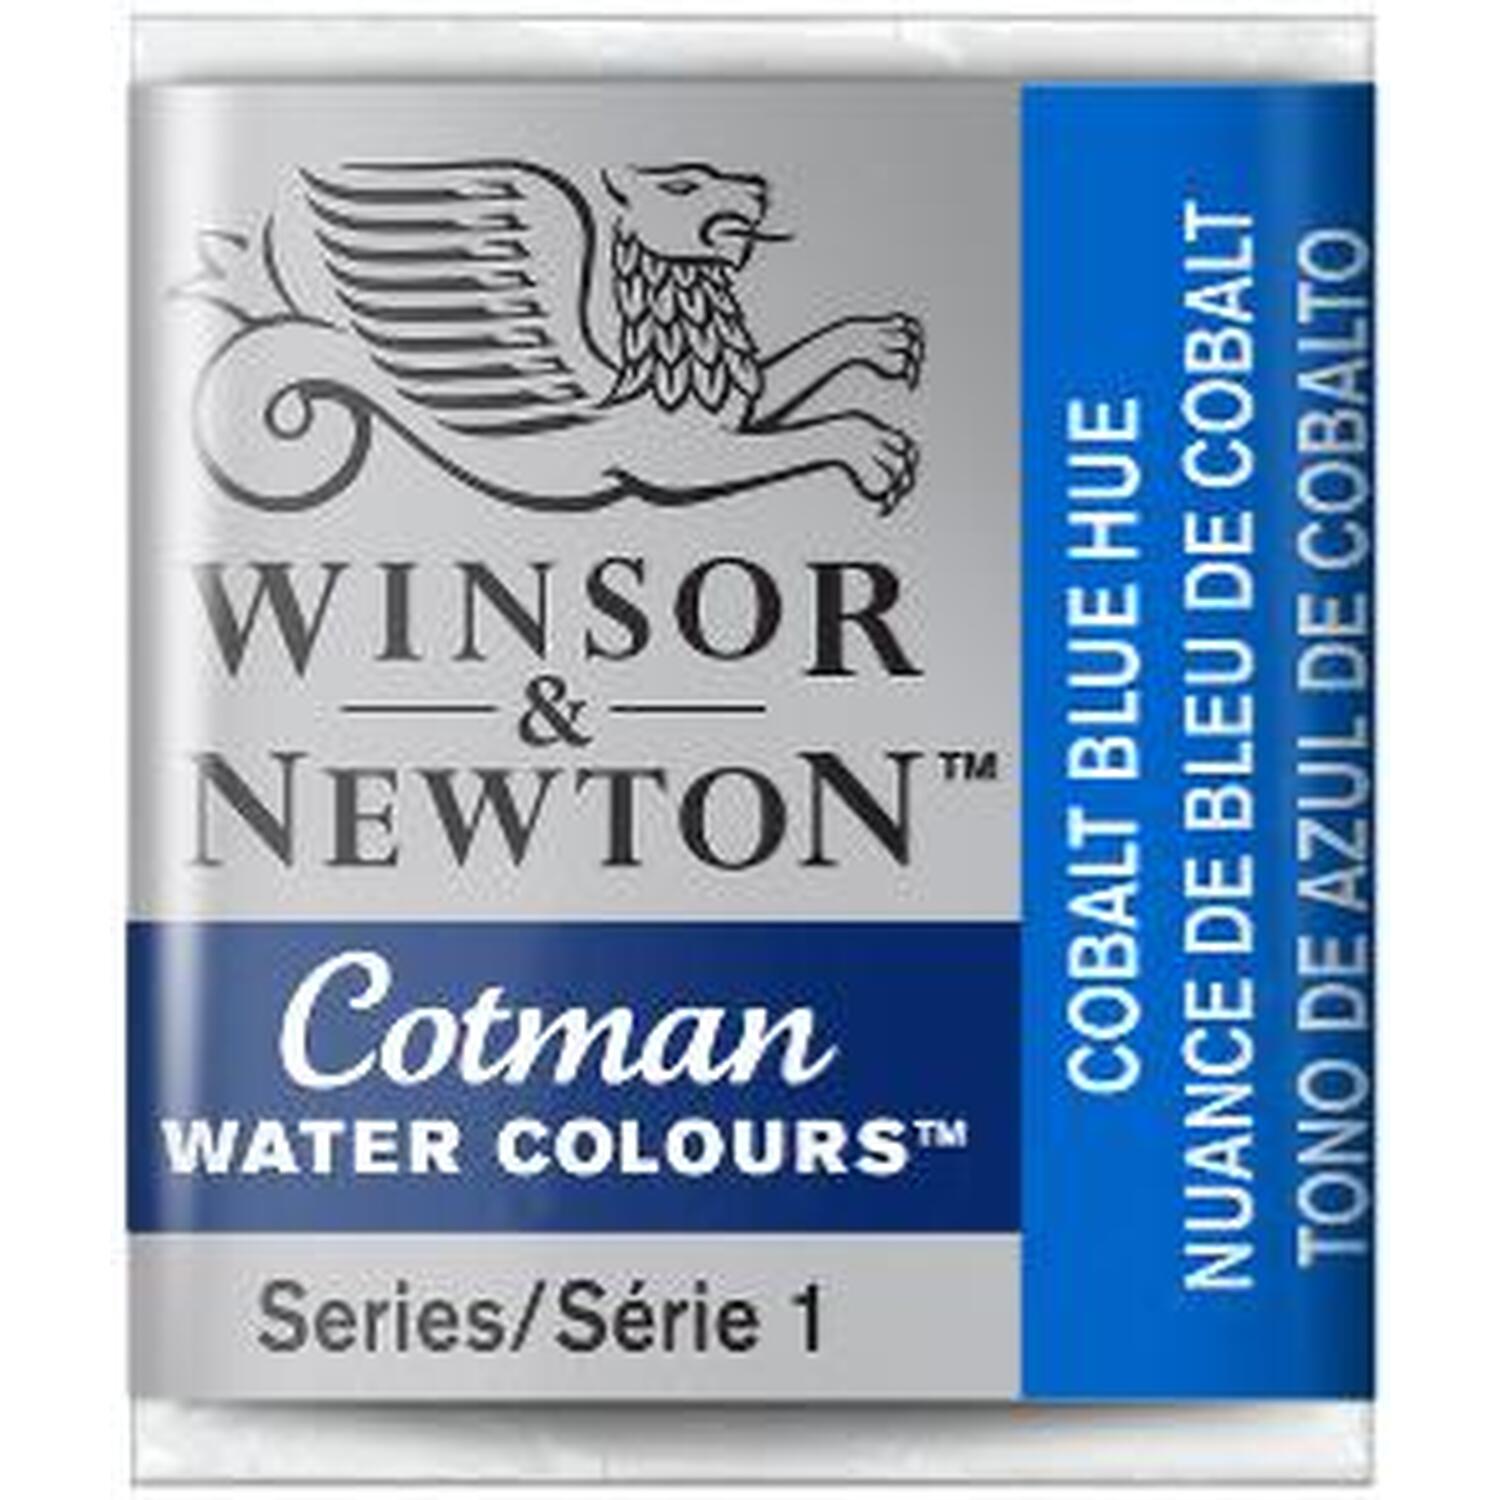 Winsor and Newton Cotman Watercolour Half Pan Paint - Cobalt Light Blue Hue Image